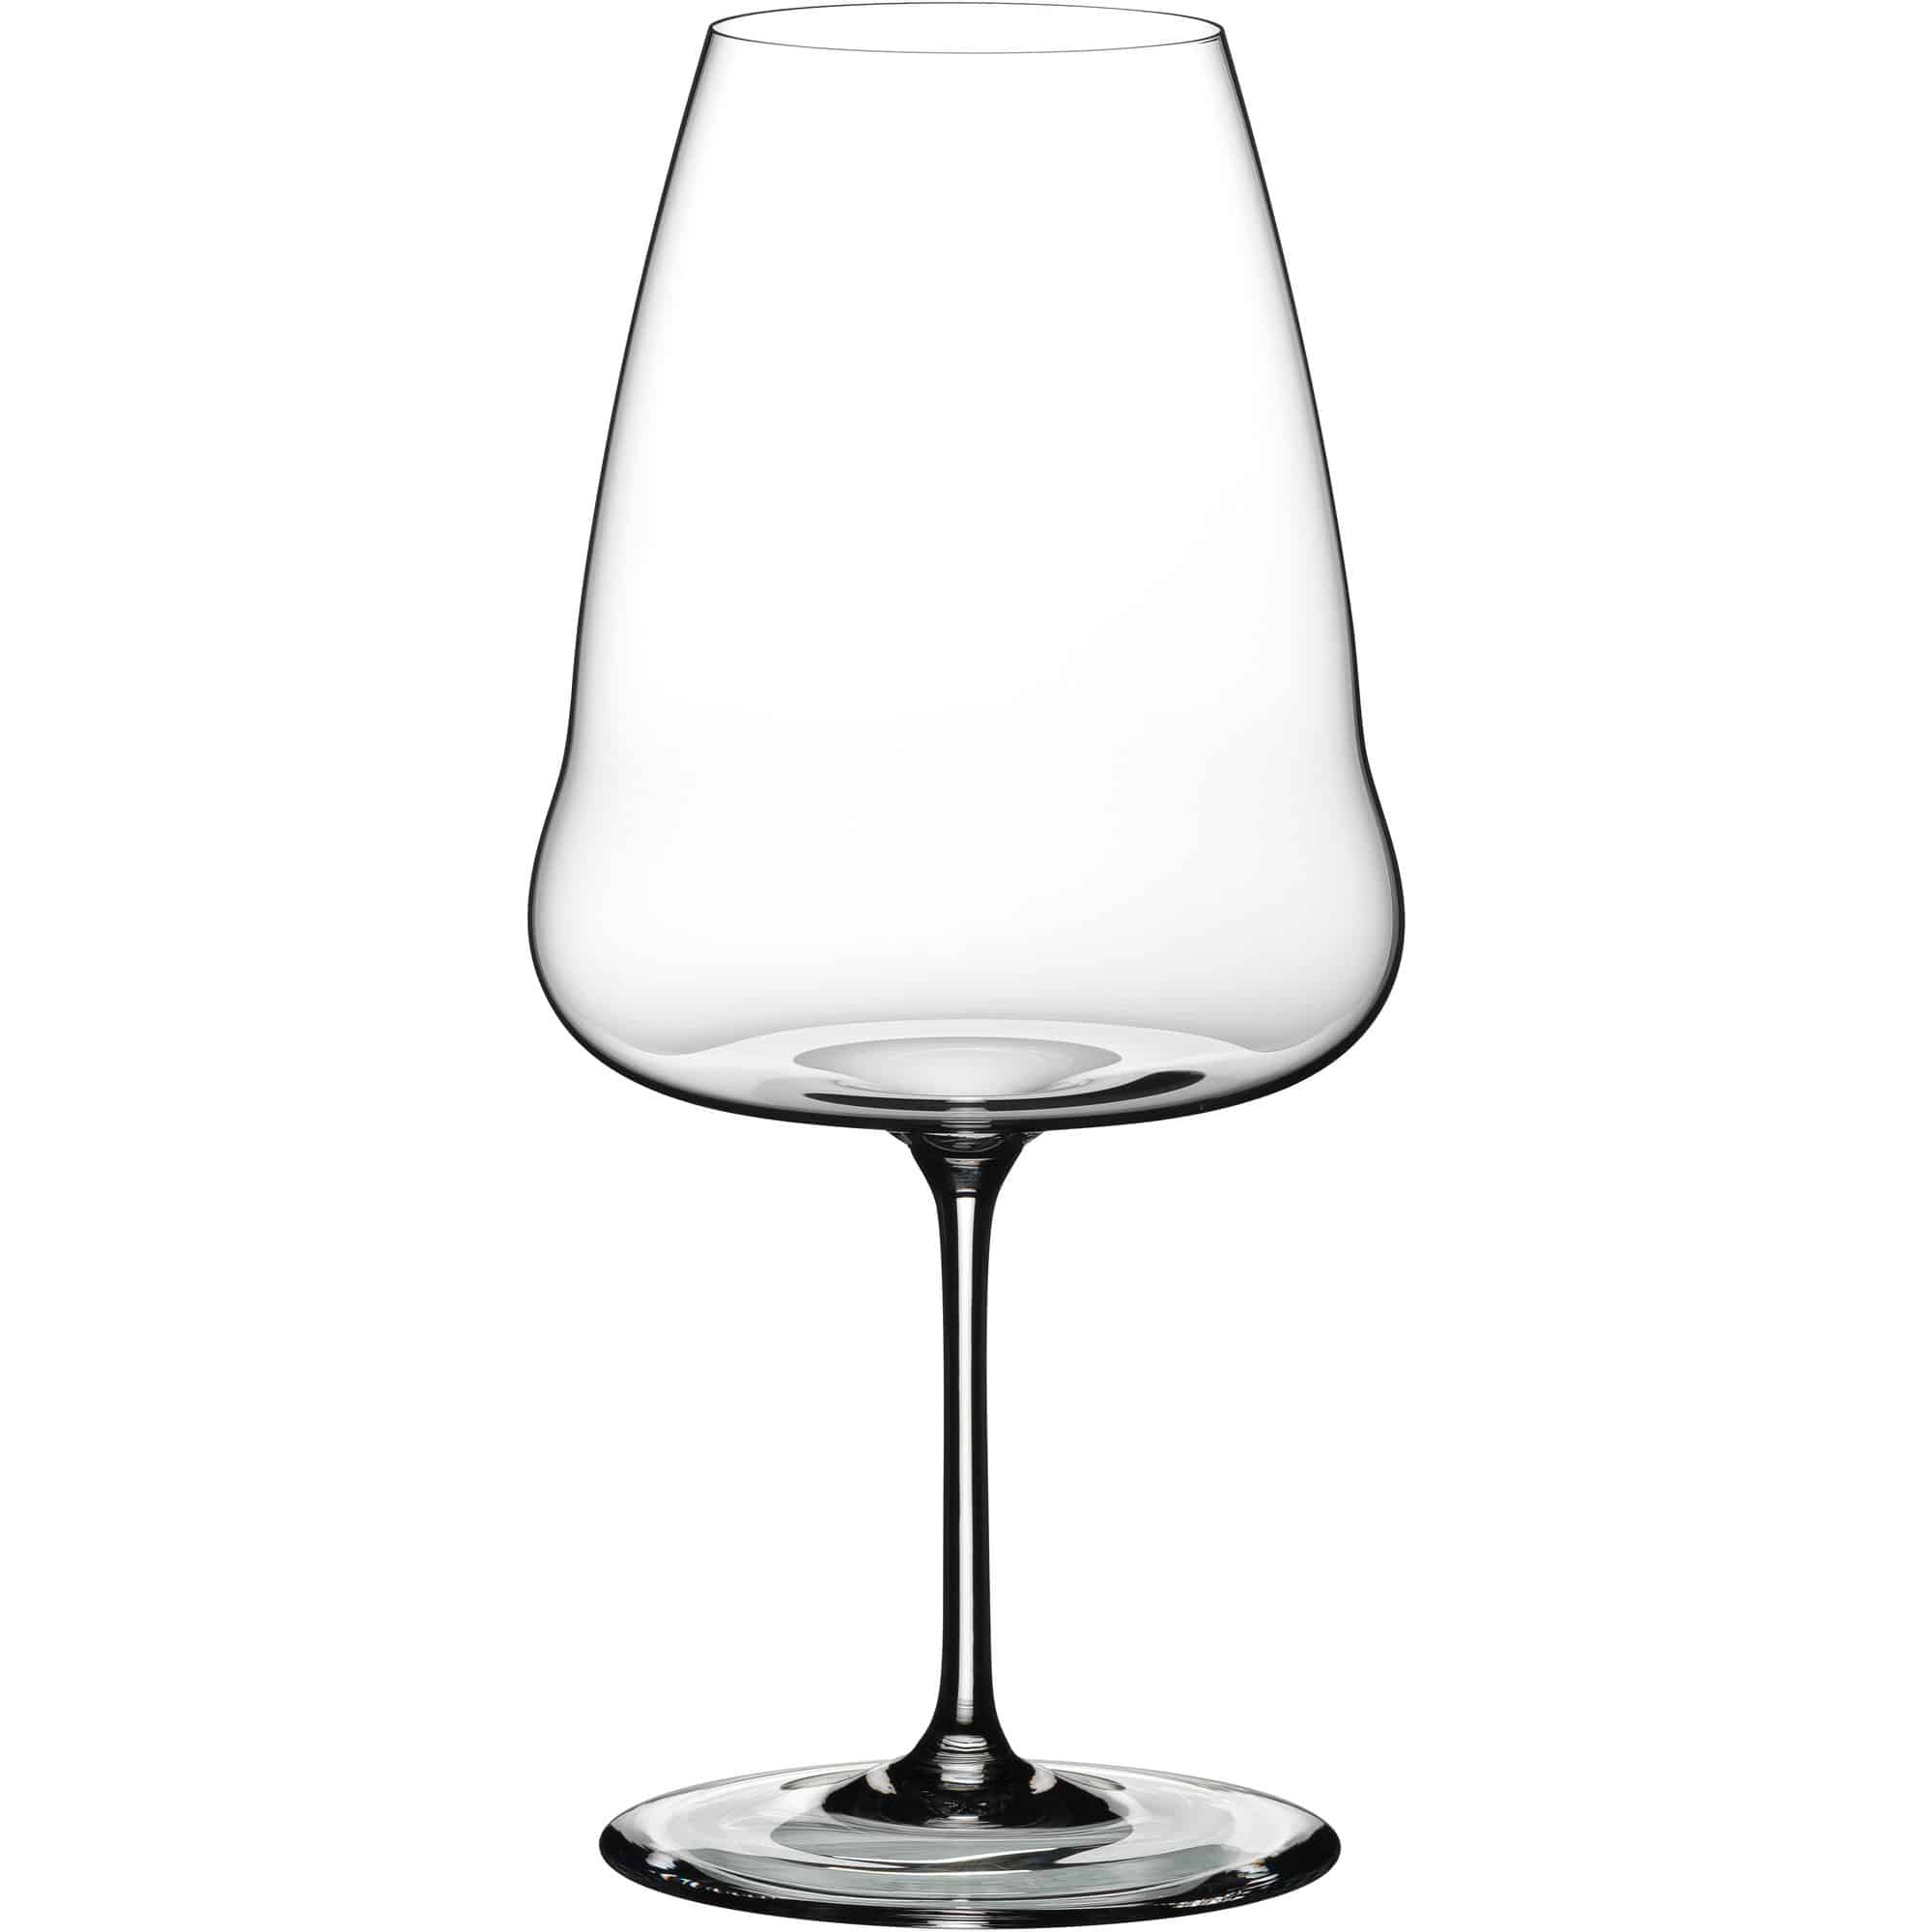 Riedel Winewings hvitvinsglass til Riesling test